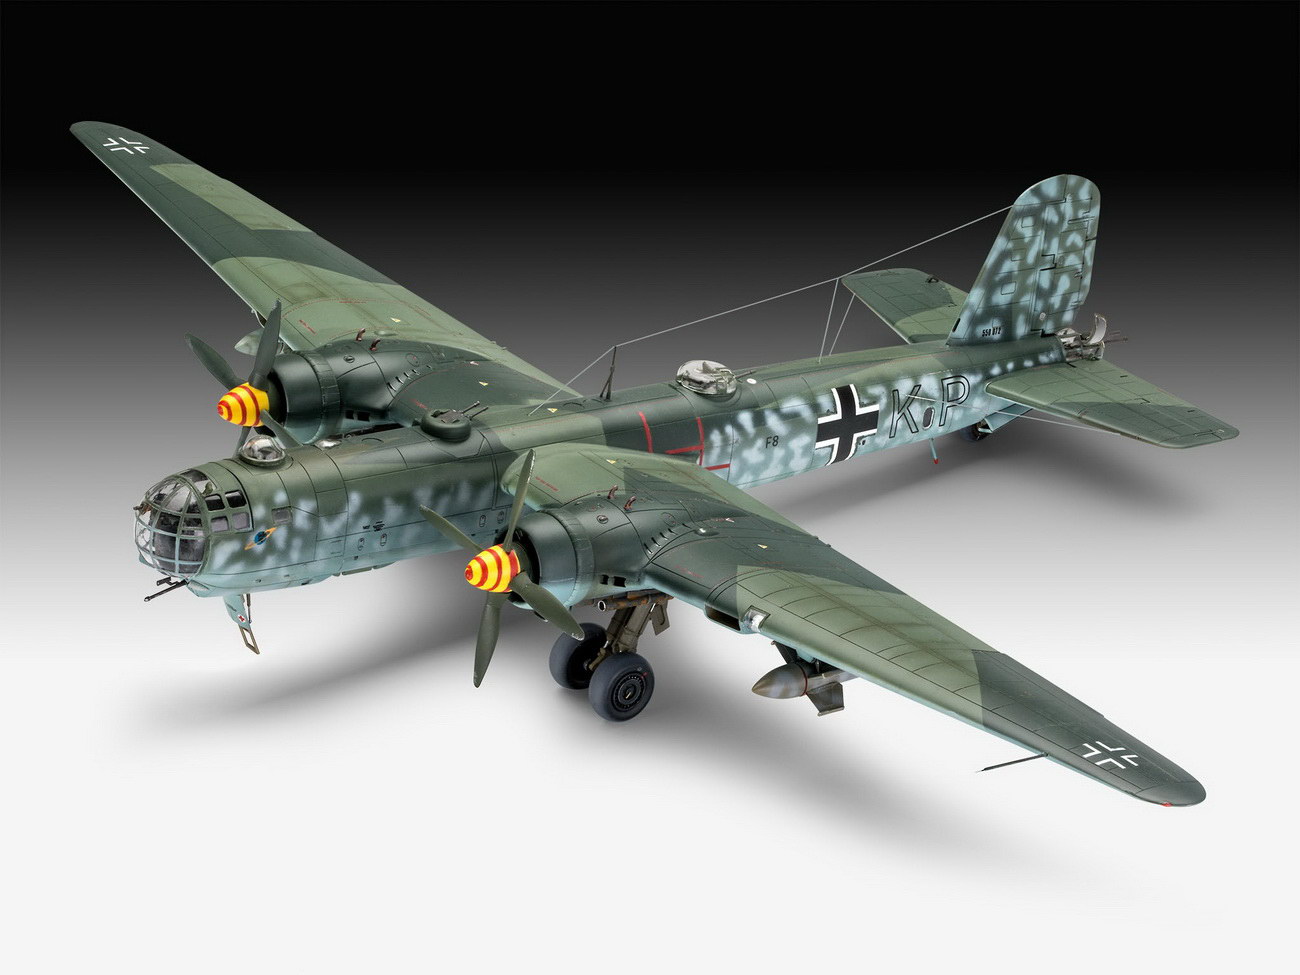 Revell 03913 - Heinkel He177 A-5 Greif - Flugzeug Modell